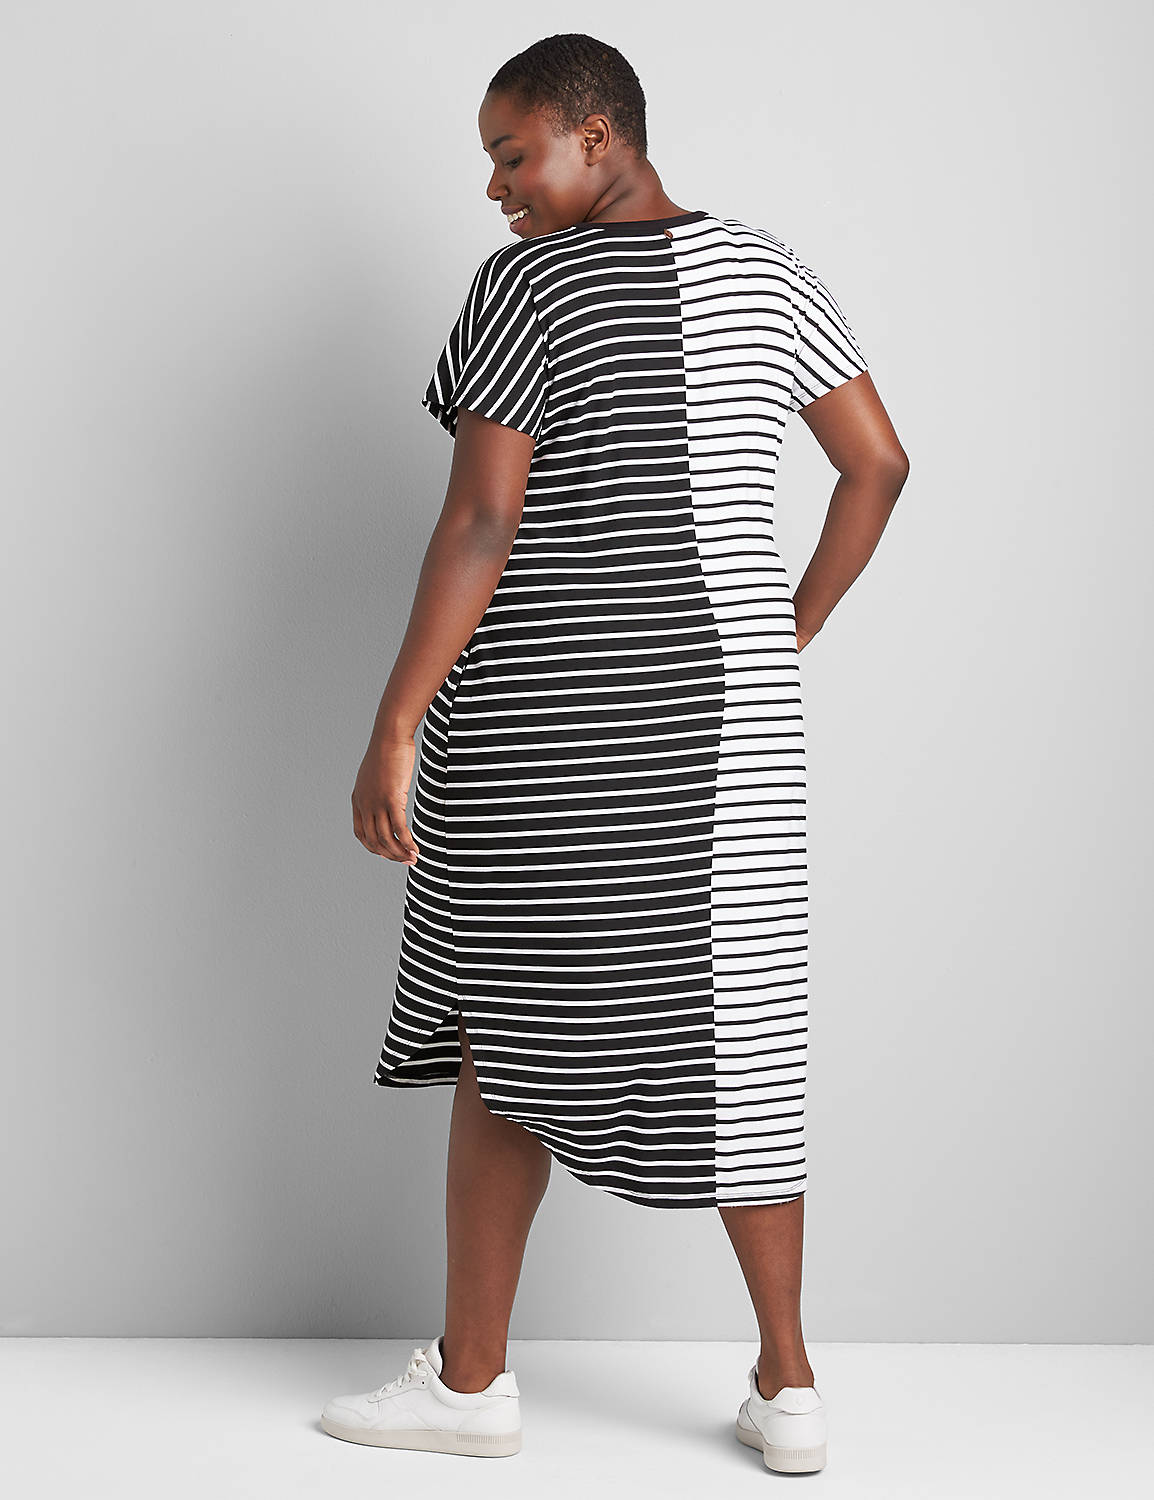 LIVI Striped Midi Dress Product Image 2